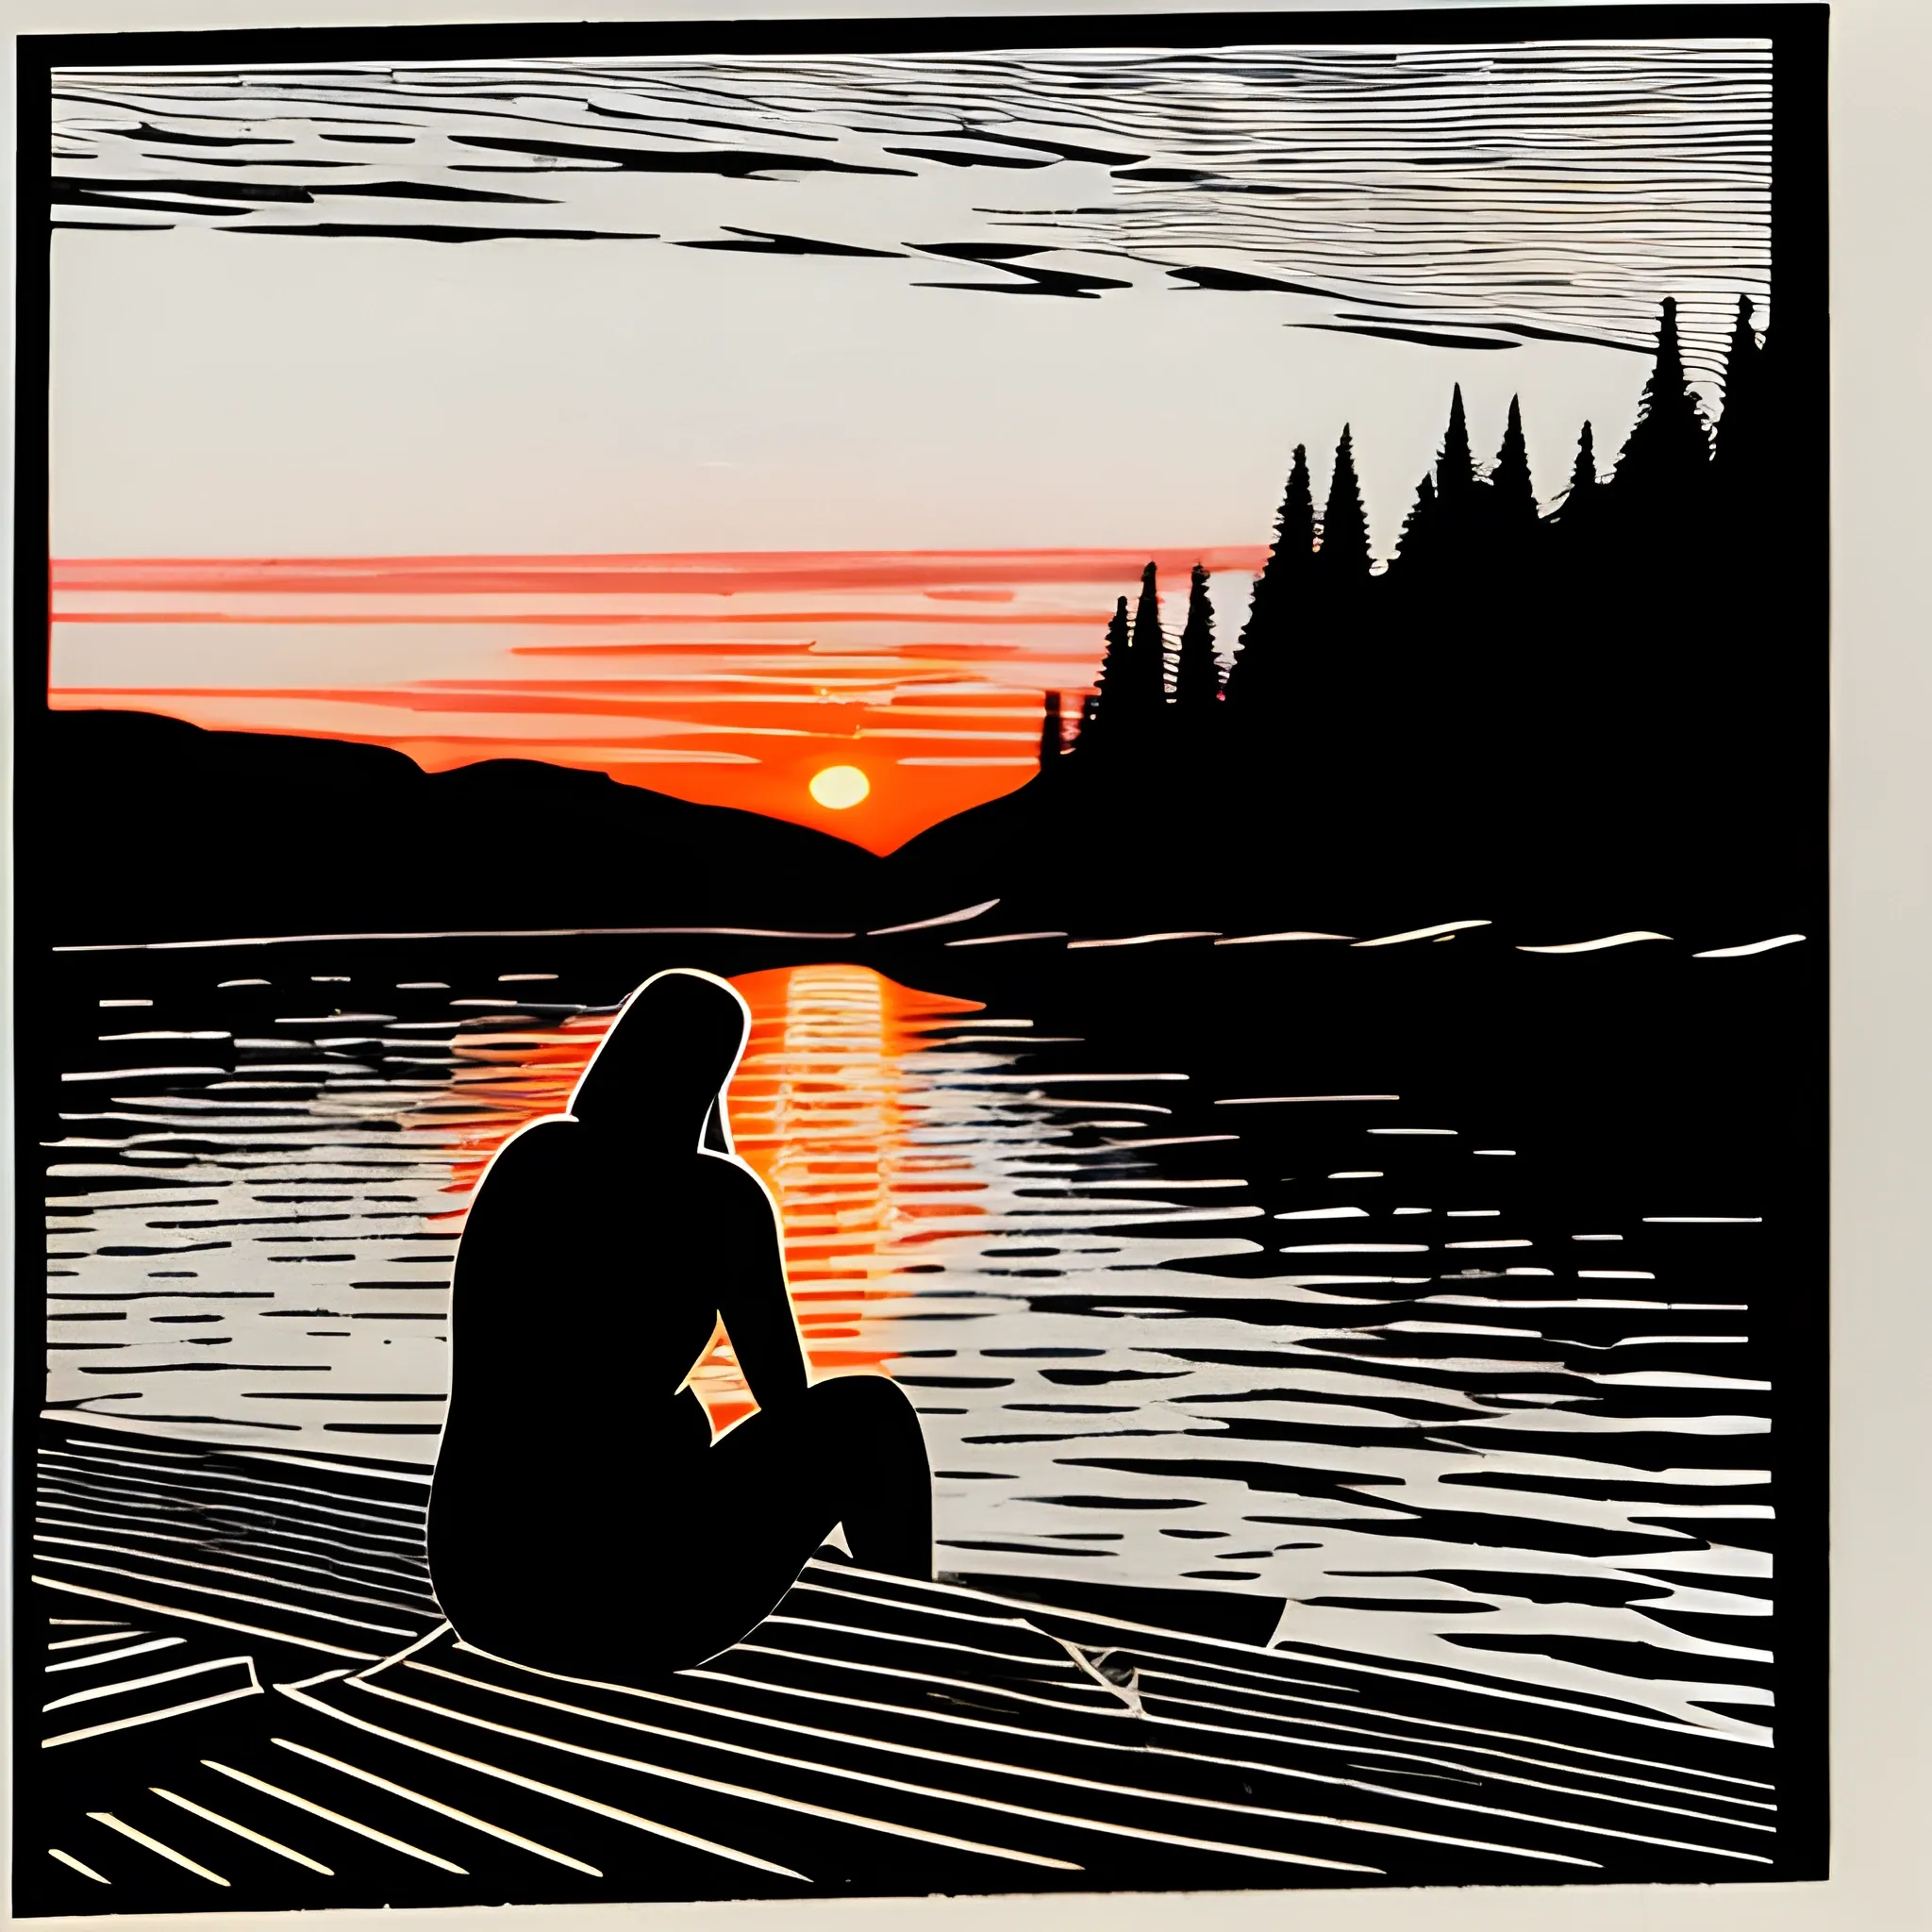 A girl sitting on lake, watching sunsets, black and white woodcut